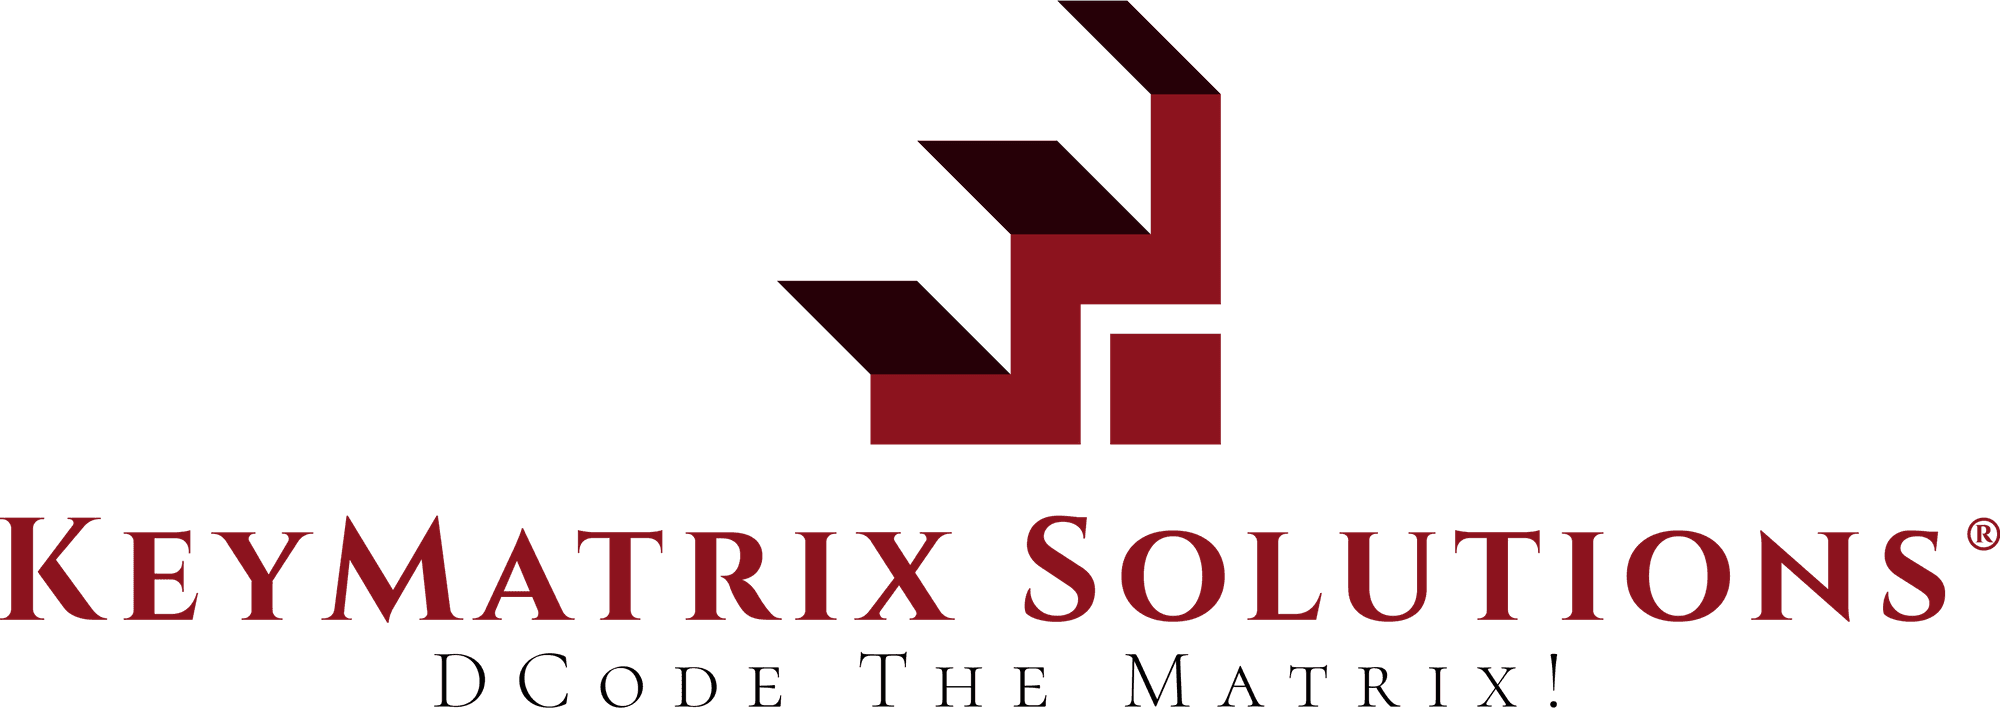 Product KeyMatrix Solutions Dcode The Matrix! – image